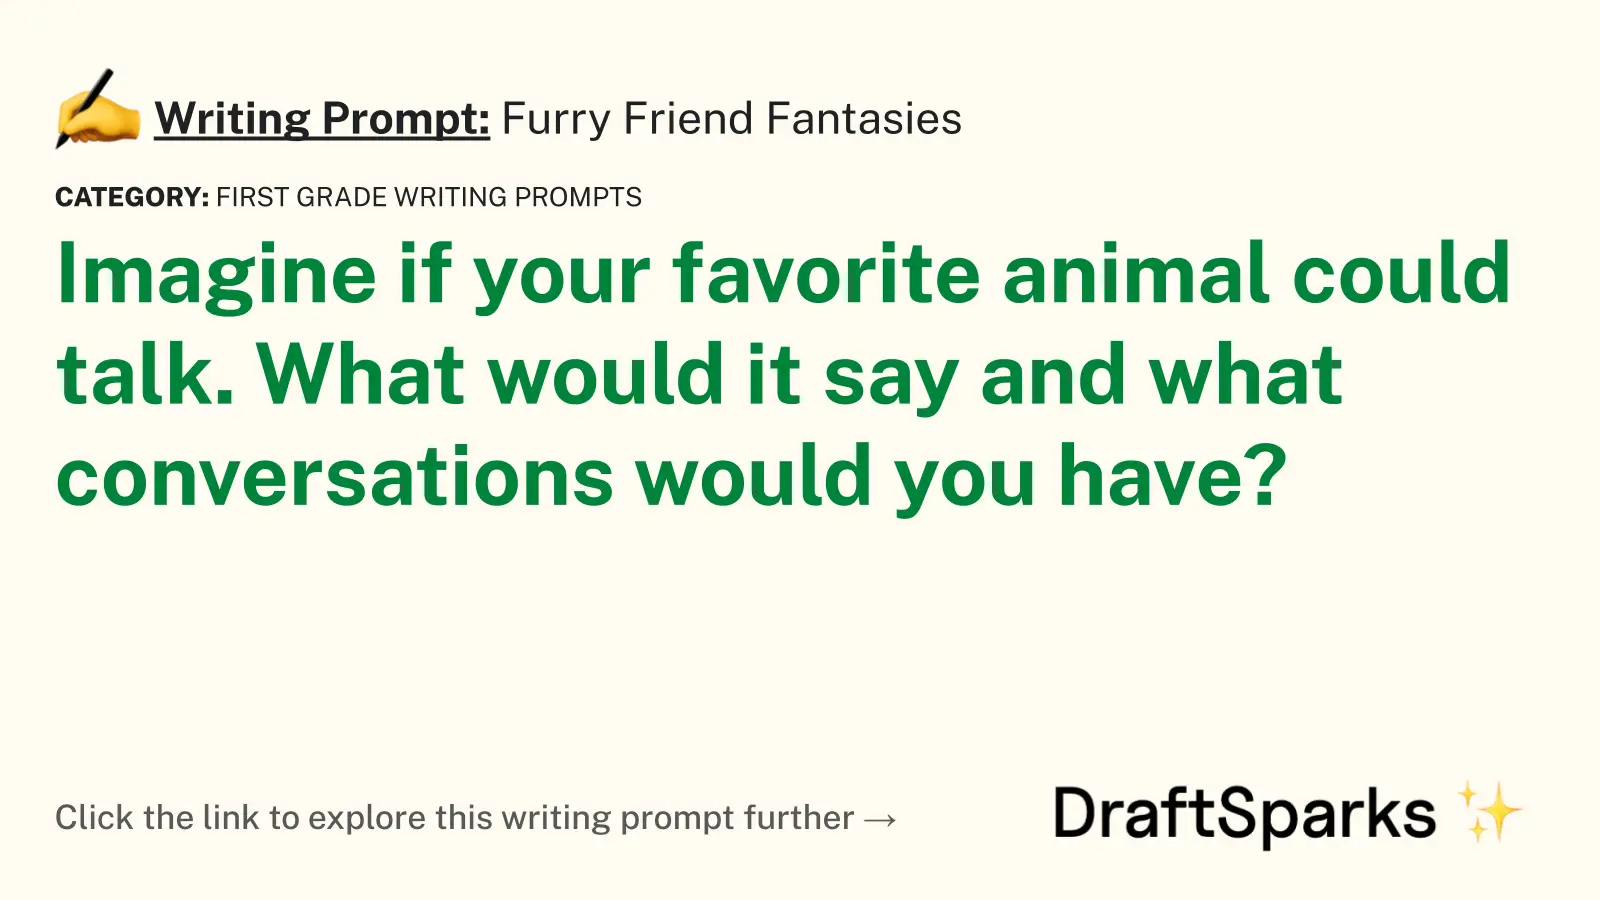 Furry Friend Fantasies